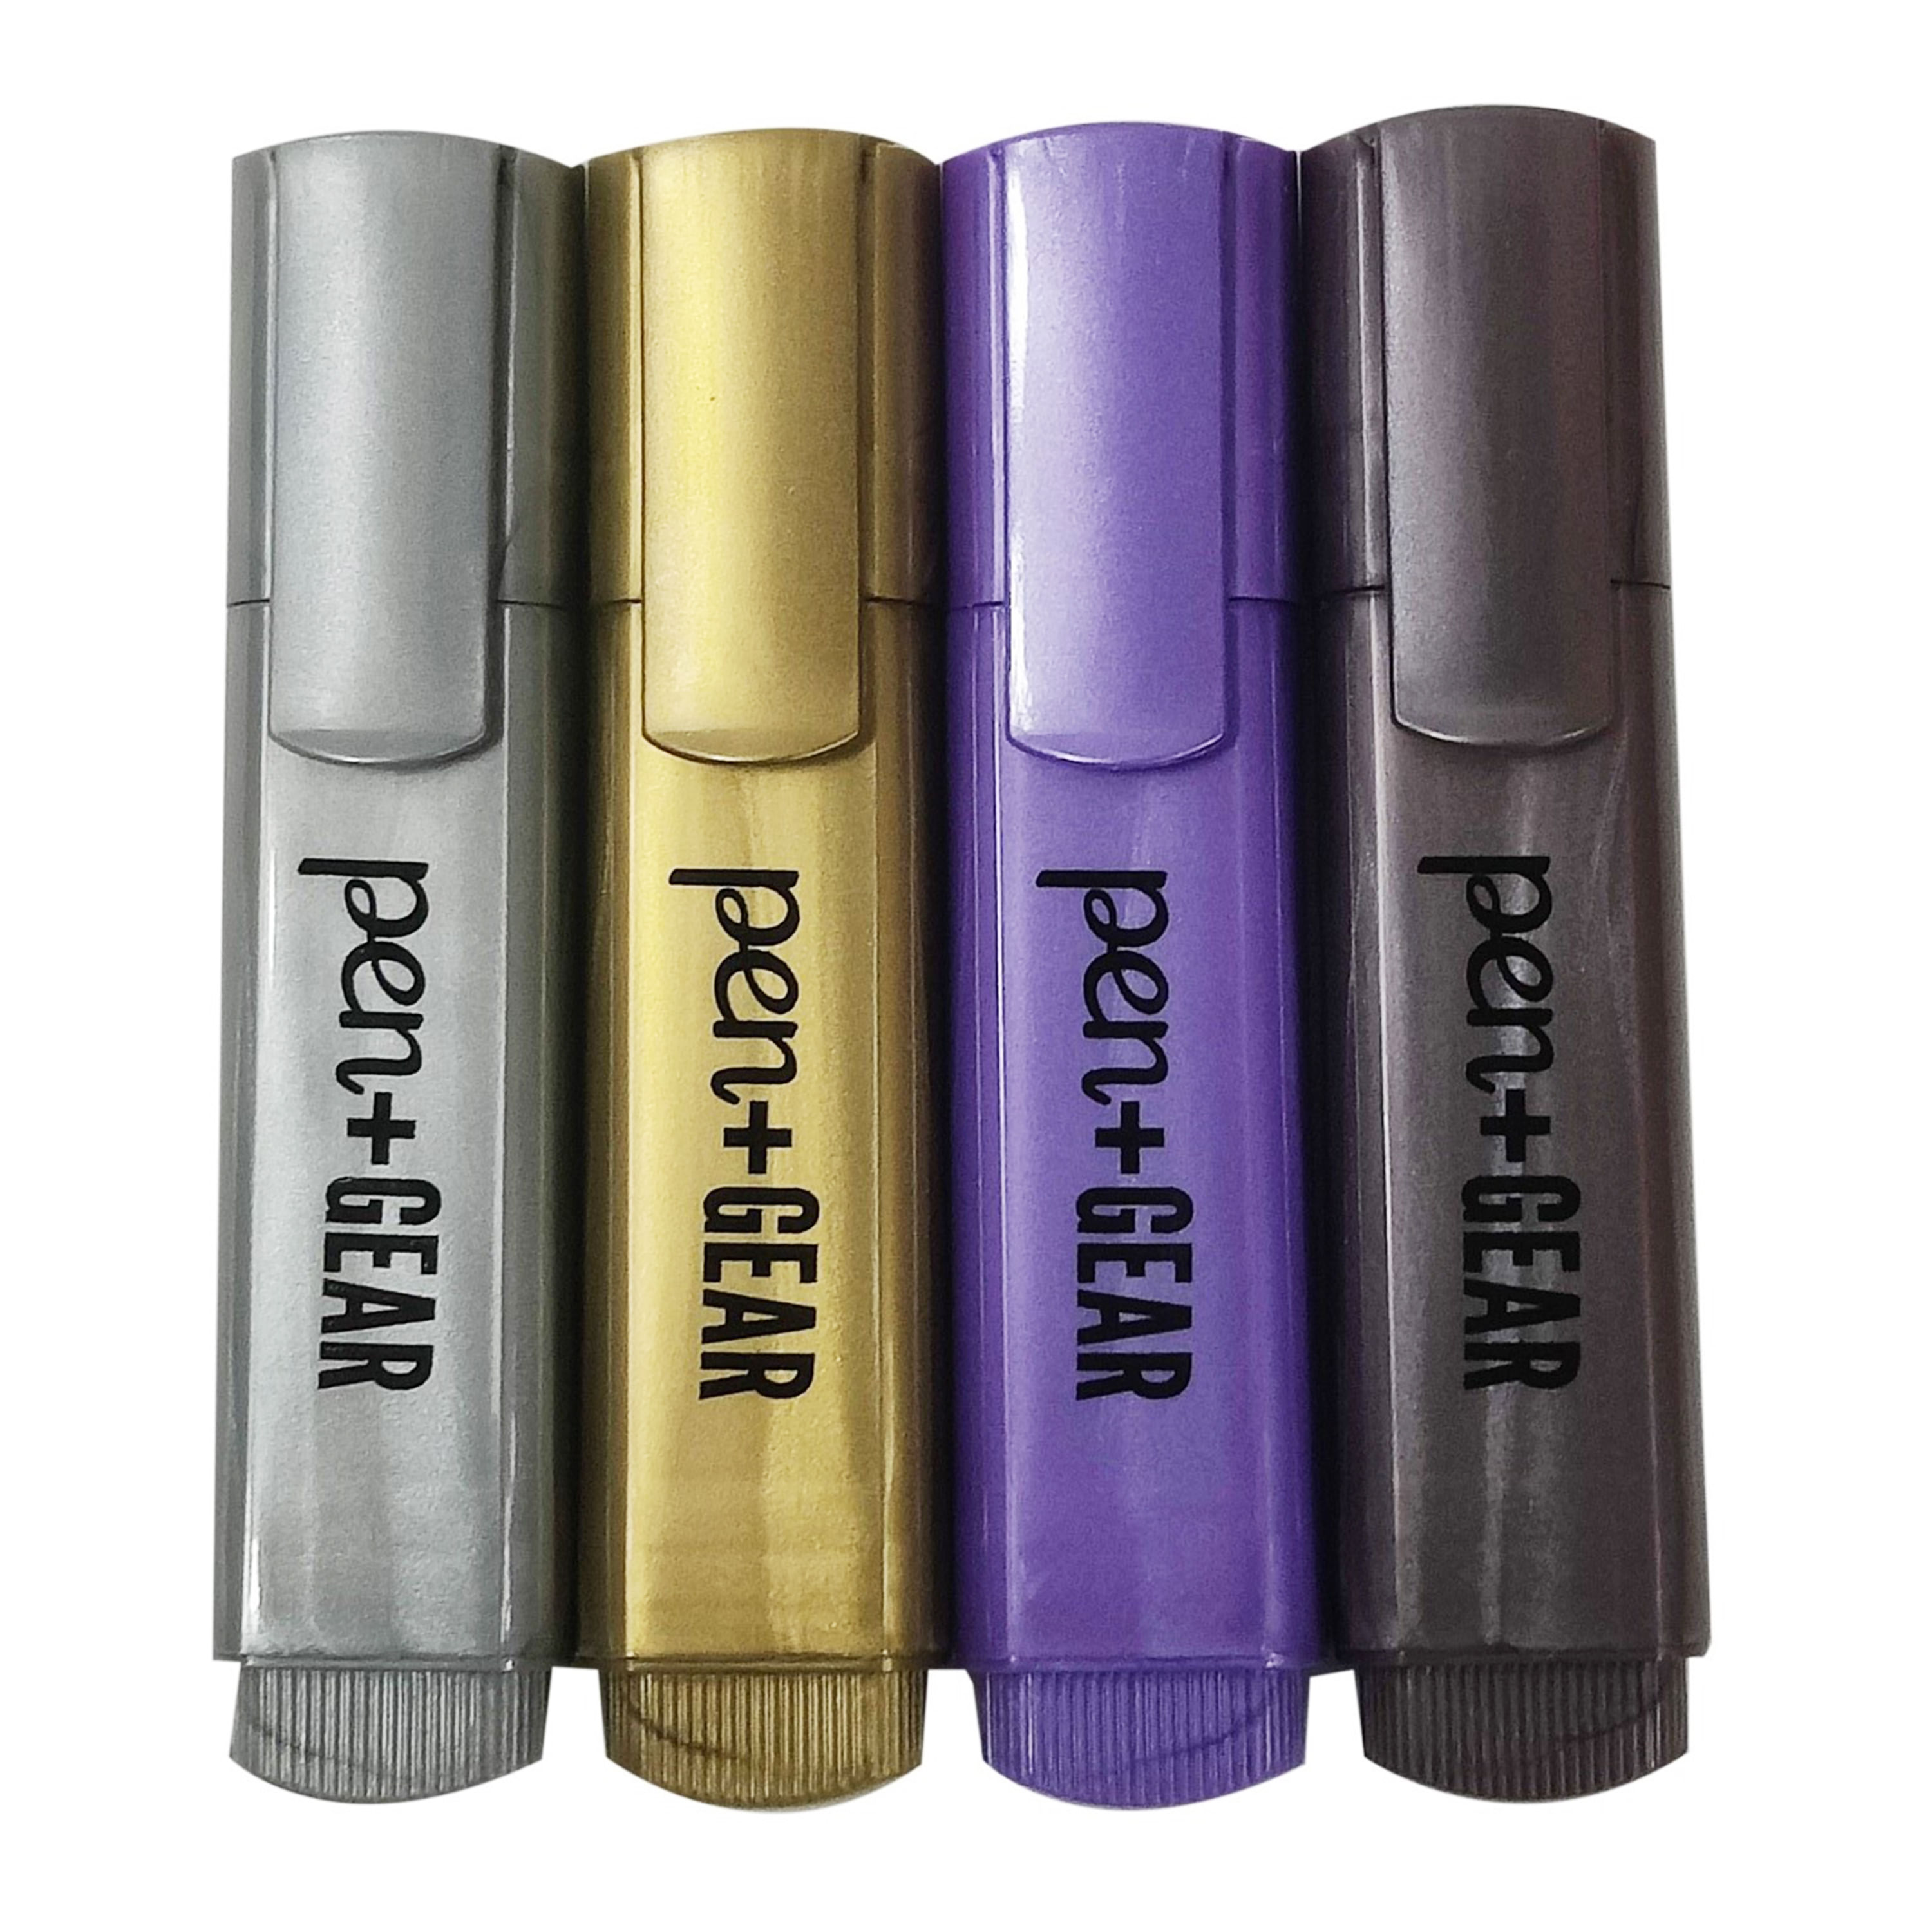 Comprar Rotuladores Pen Gear, Surtido de colores -10 pzas